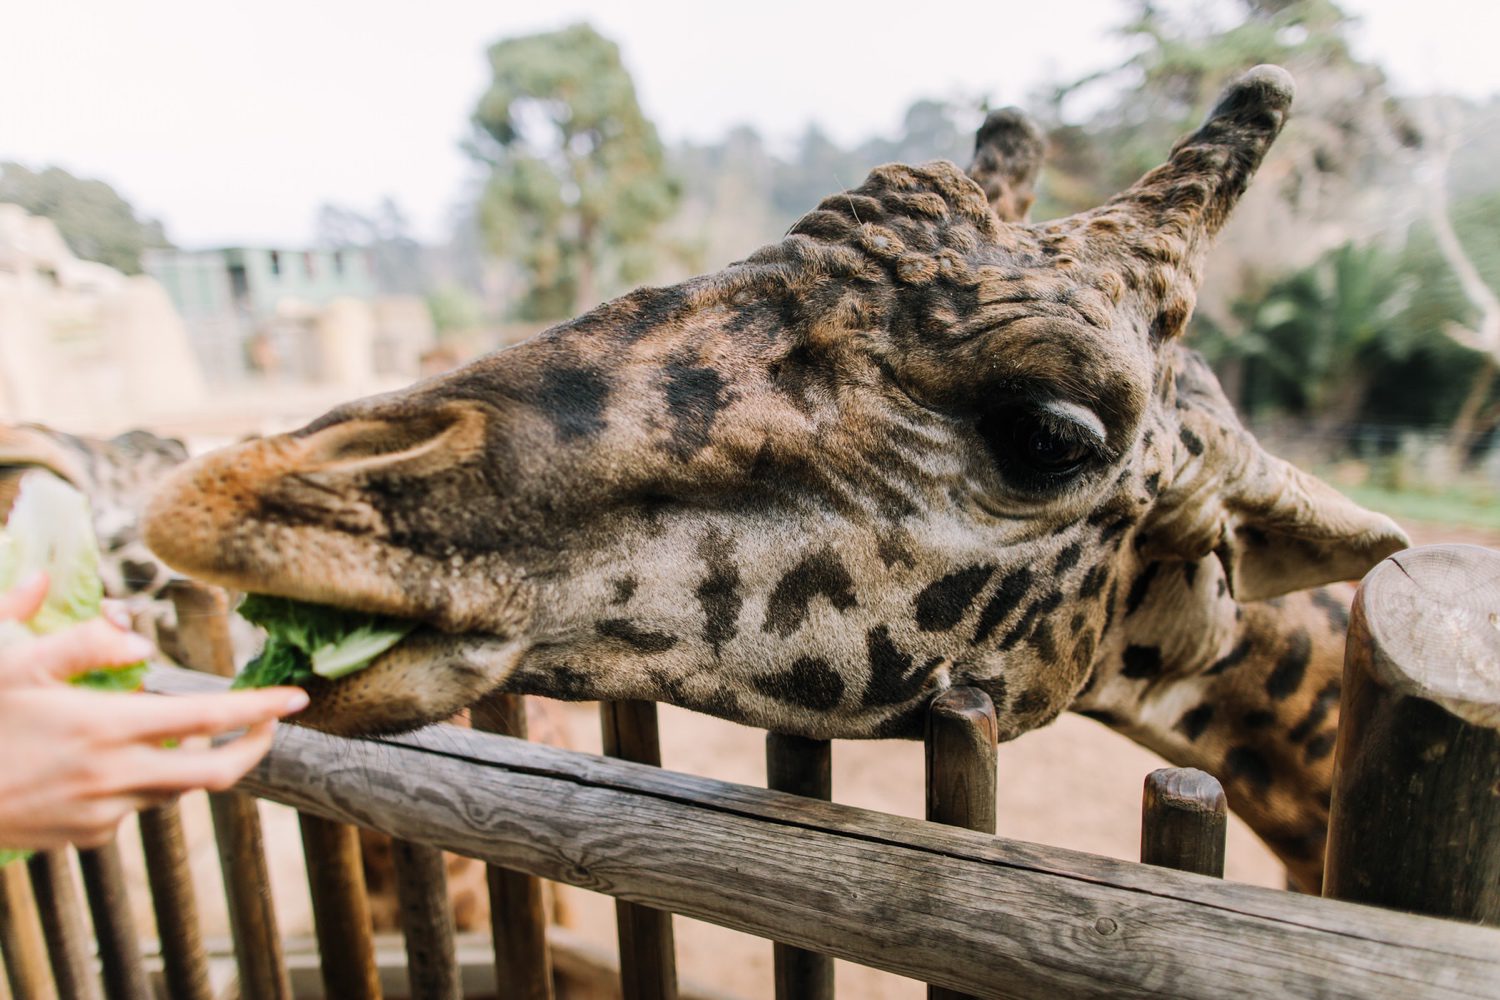 giraffe at Santa Barbara zoo eating lettuce